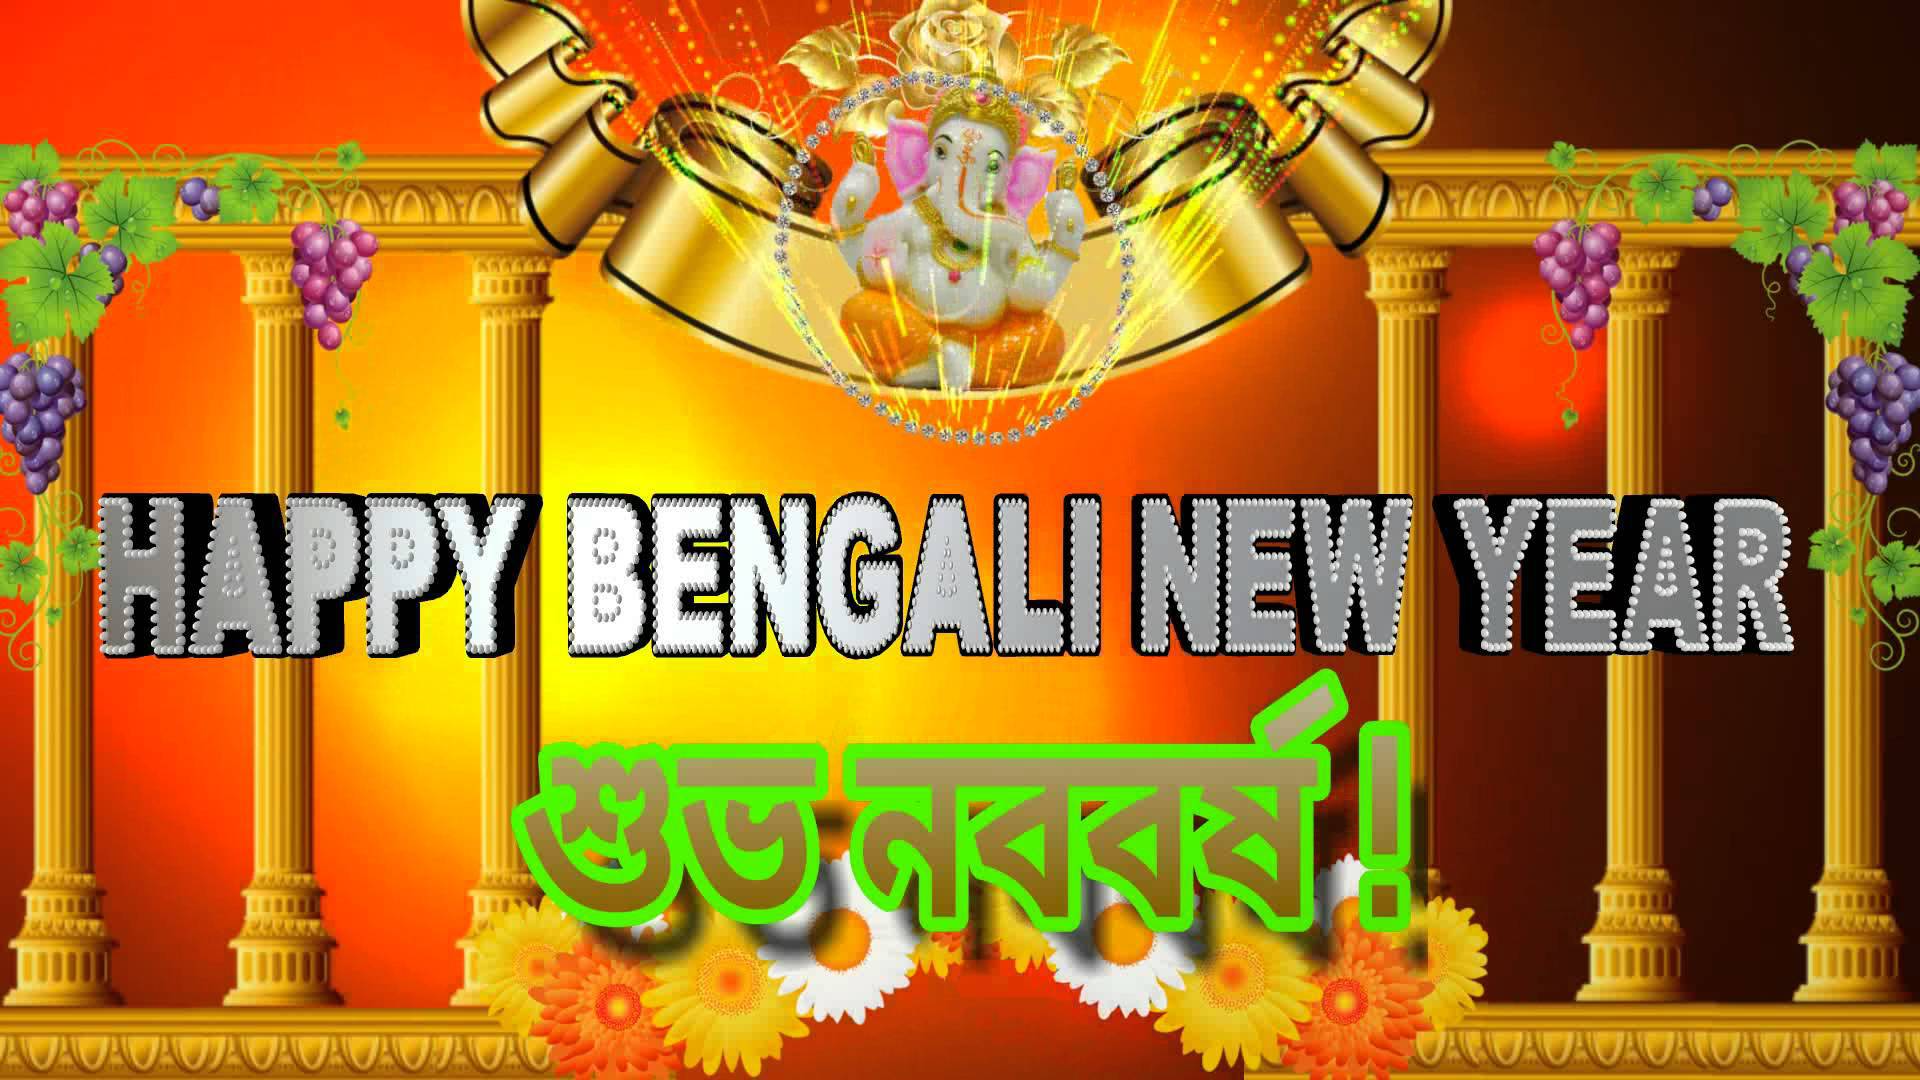 Bangla Noboborsho Wallpaper - Bengali New Year 2019 - HD Wallpaper 